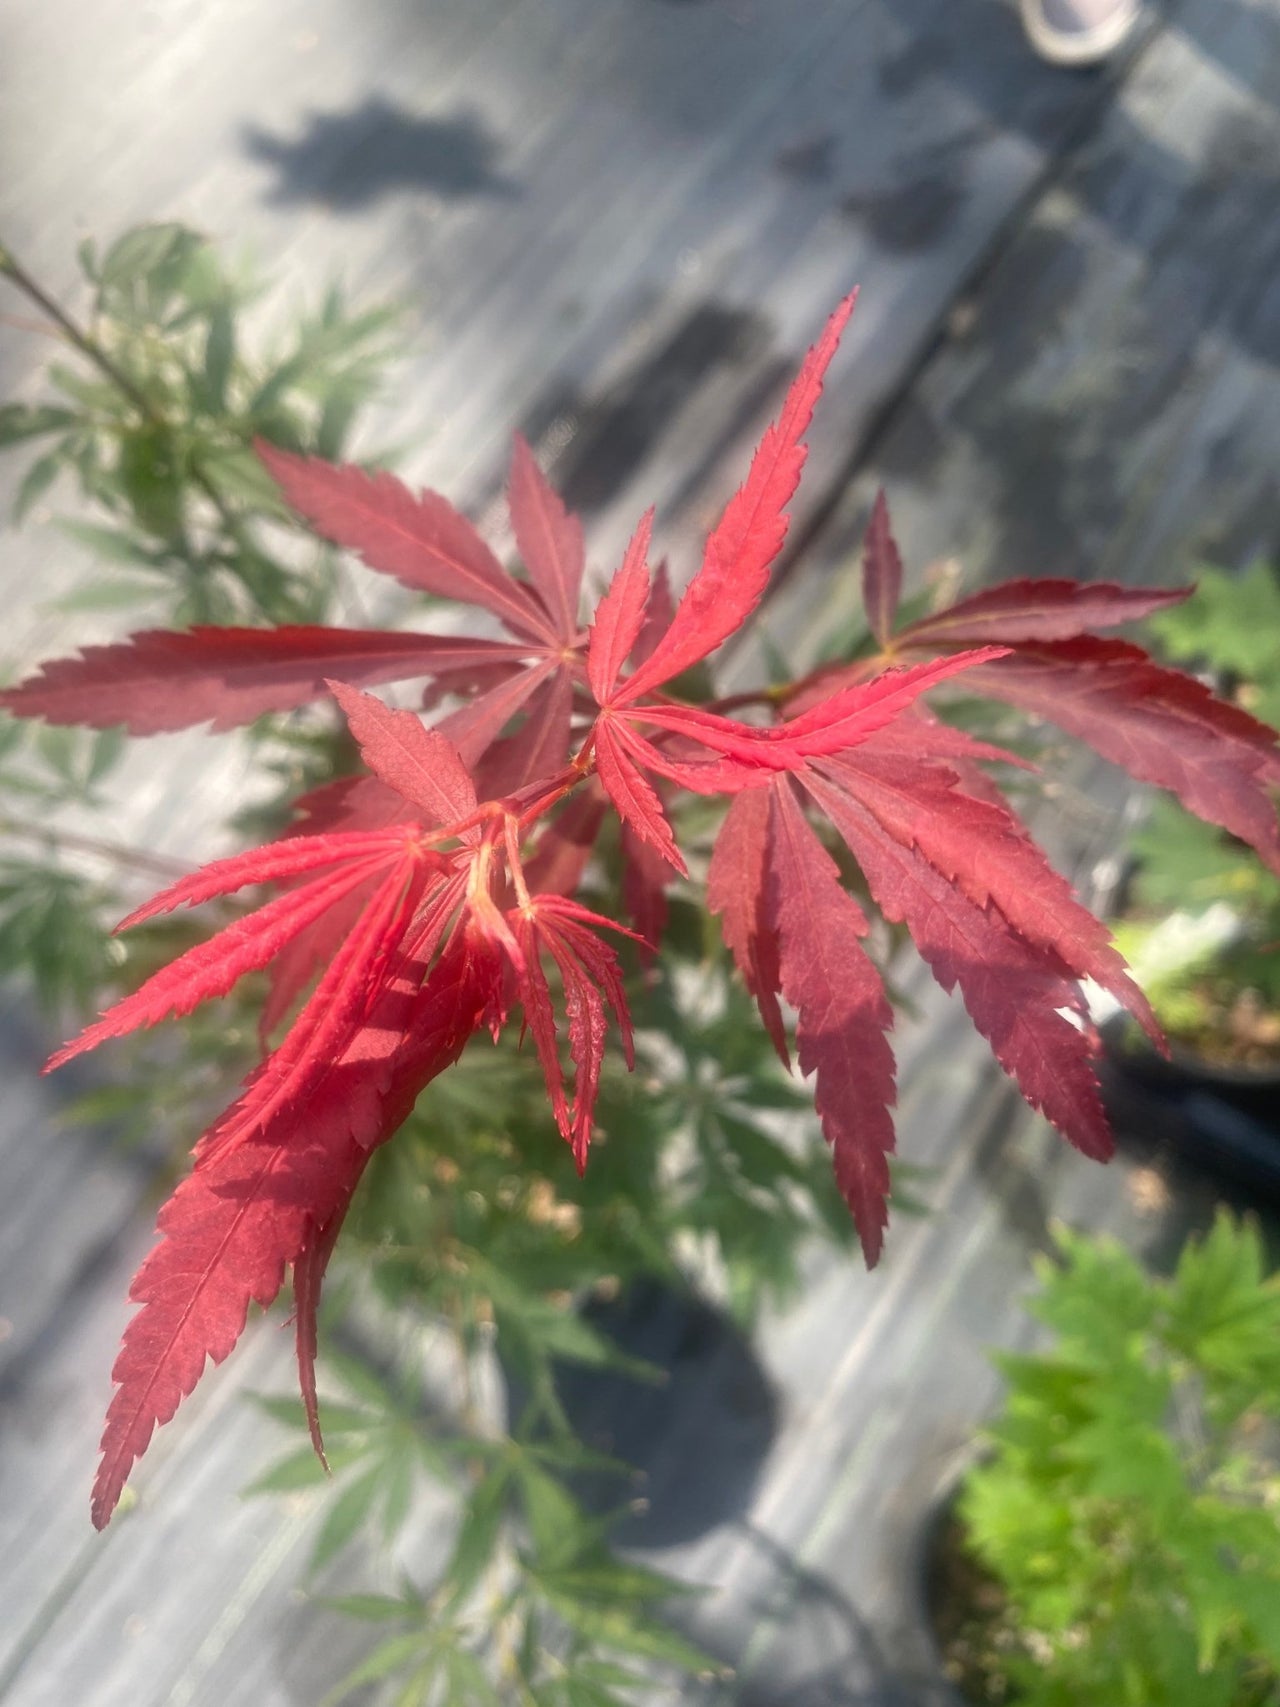 Acer shirasawanum 'Royalty' - Maple Ridge Nursery